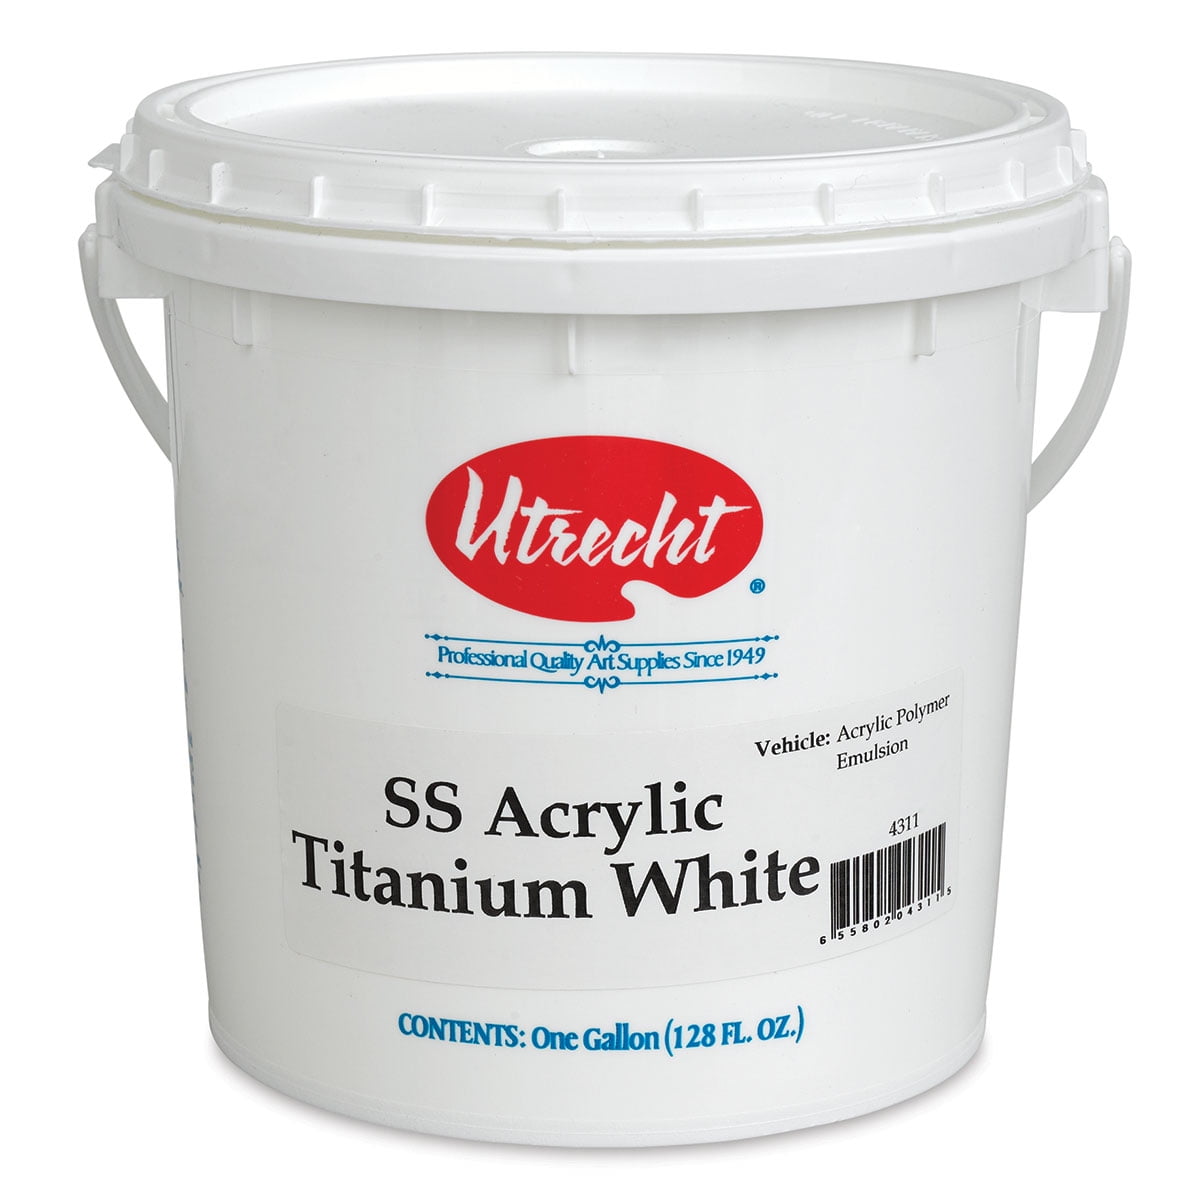 VA - Acrylic Paint Tube Vallejo 500ml - (11) Titanium White Rutile – Pack  to School